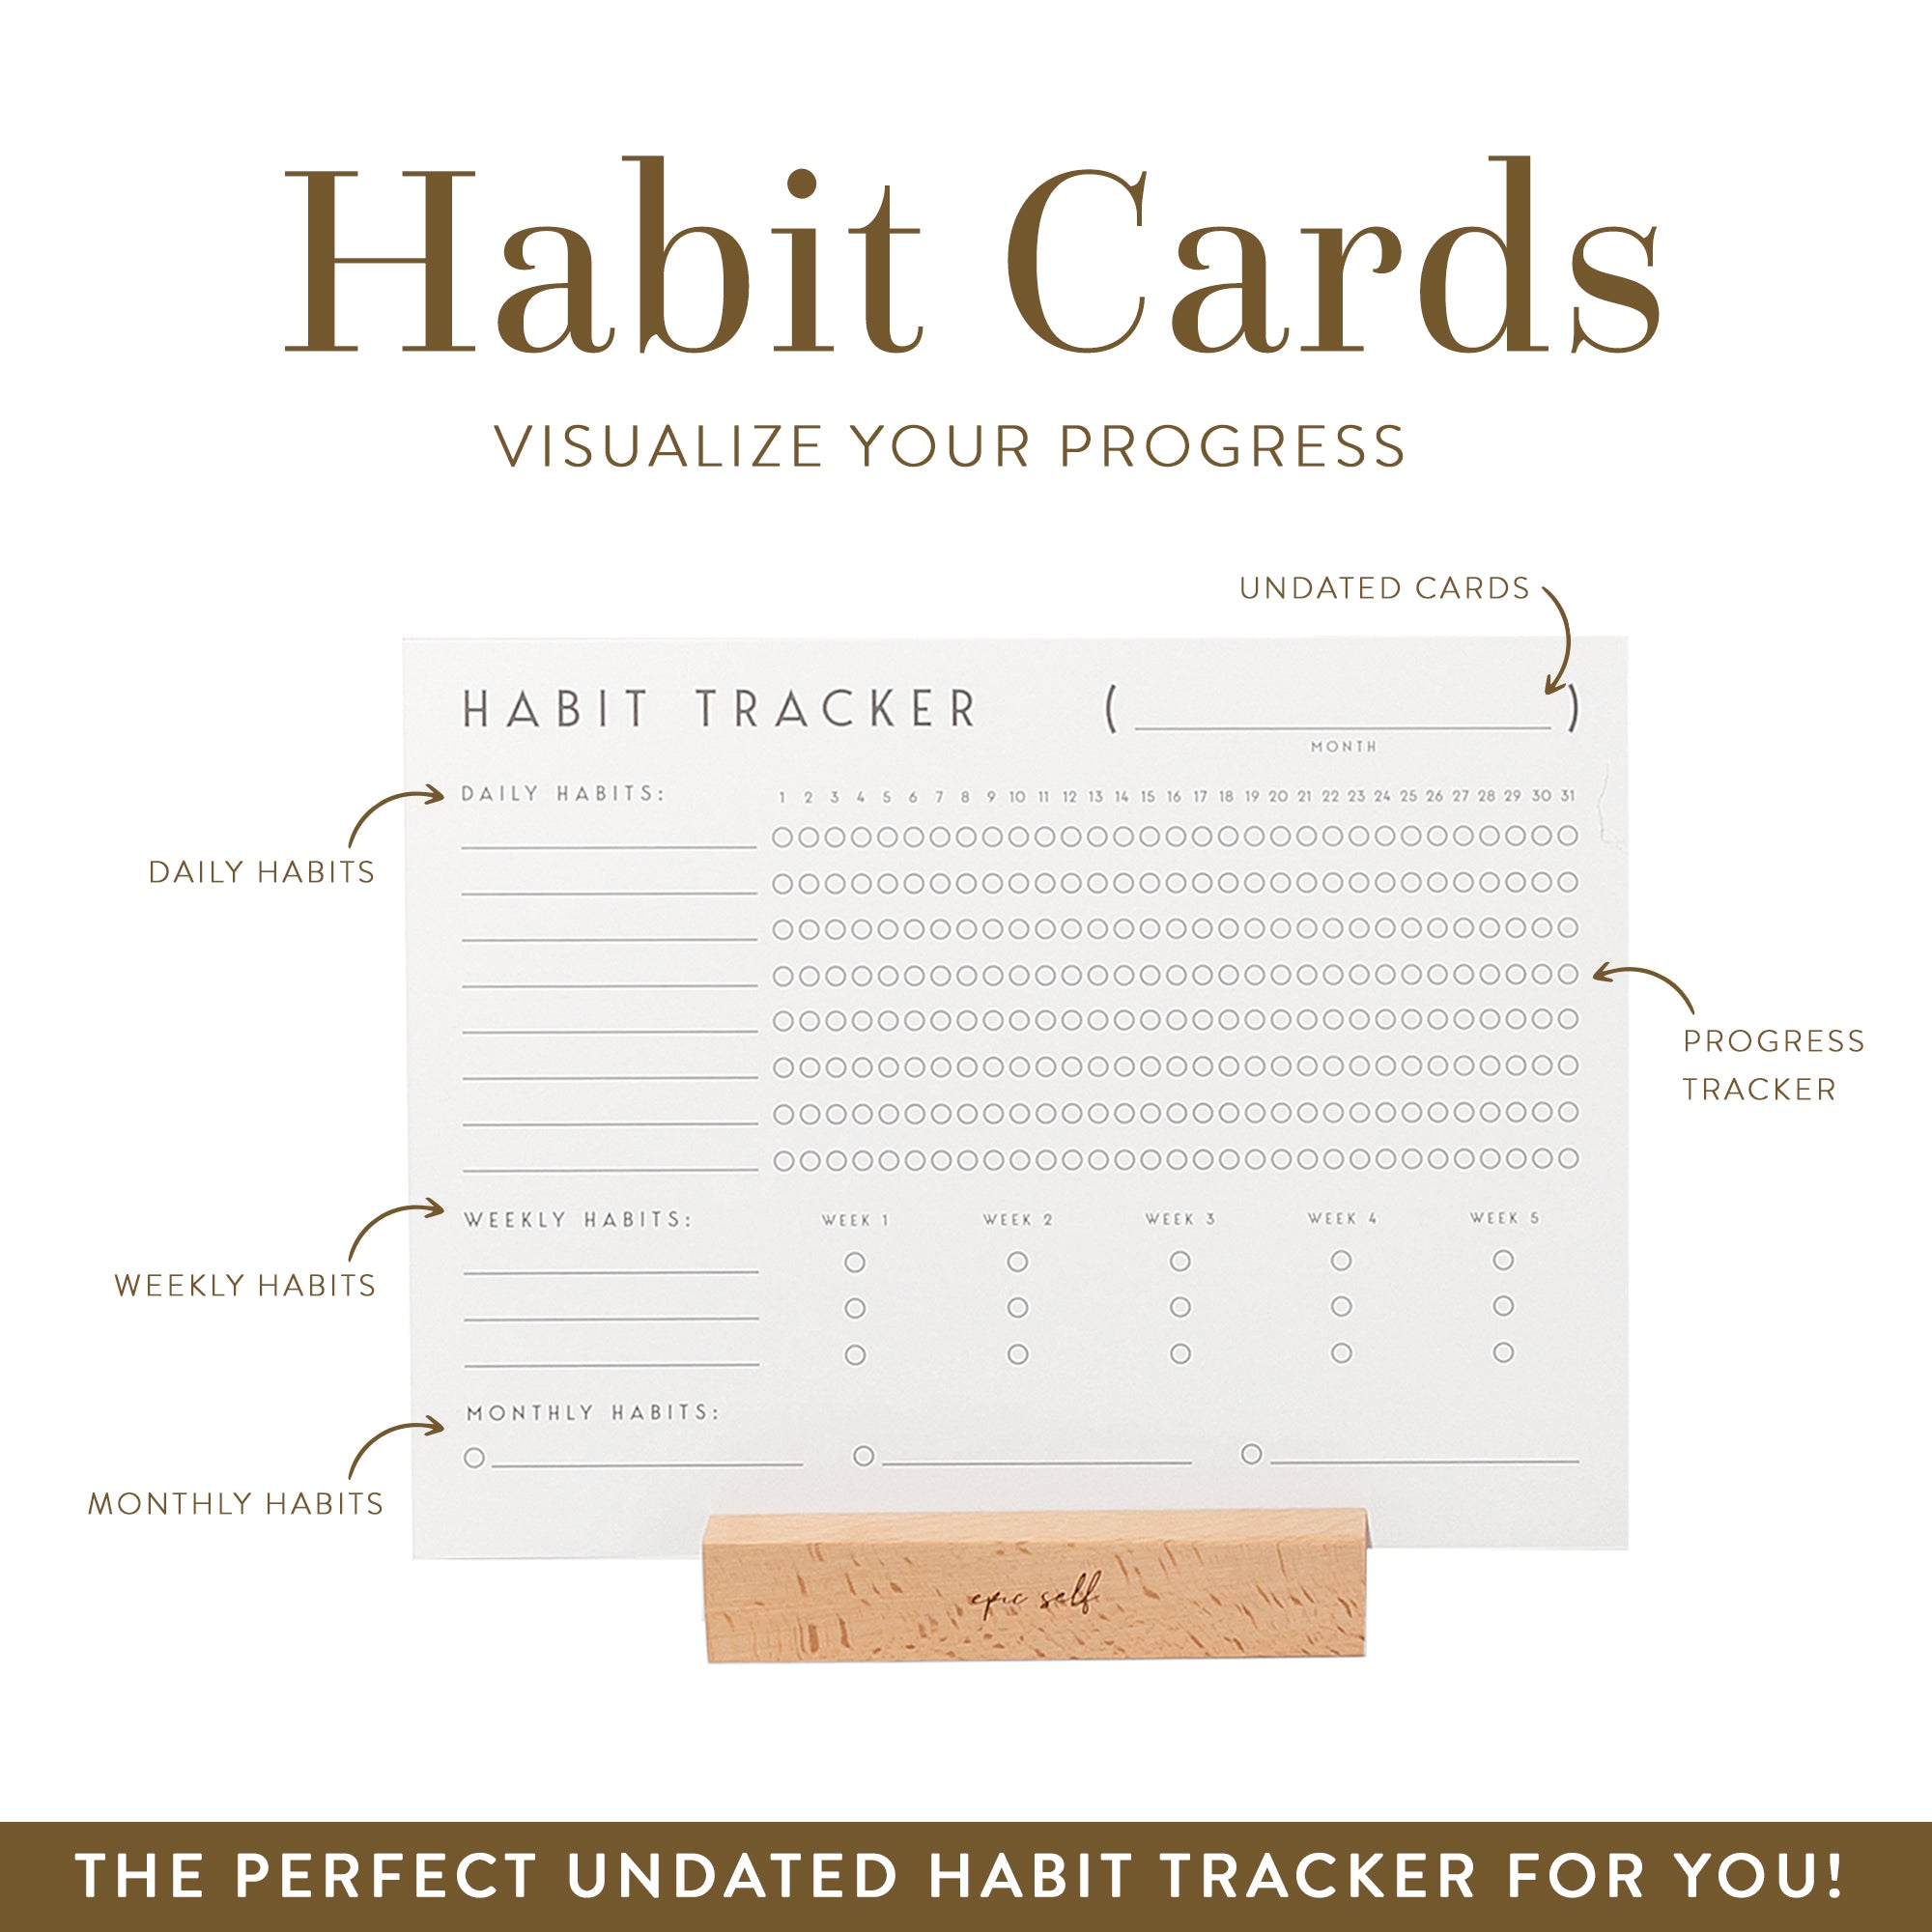 Habit Tracker Cards